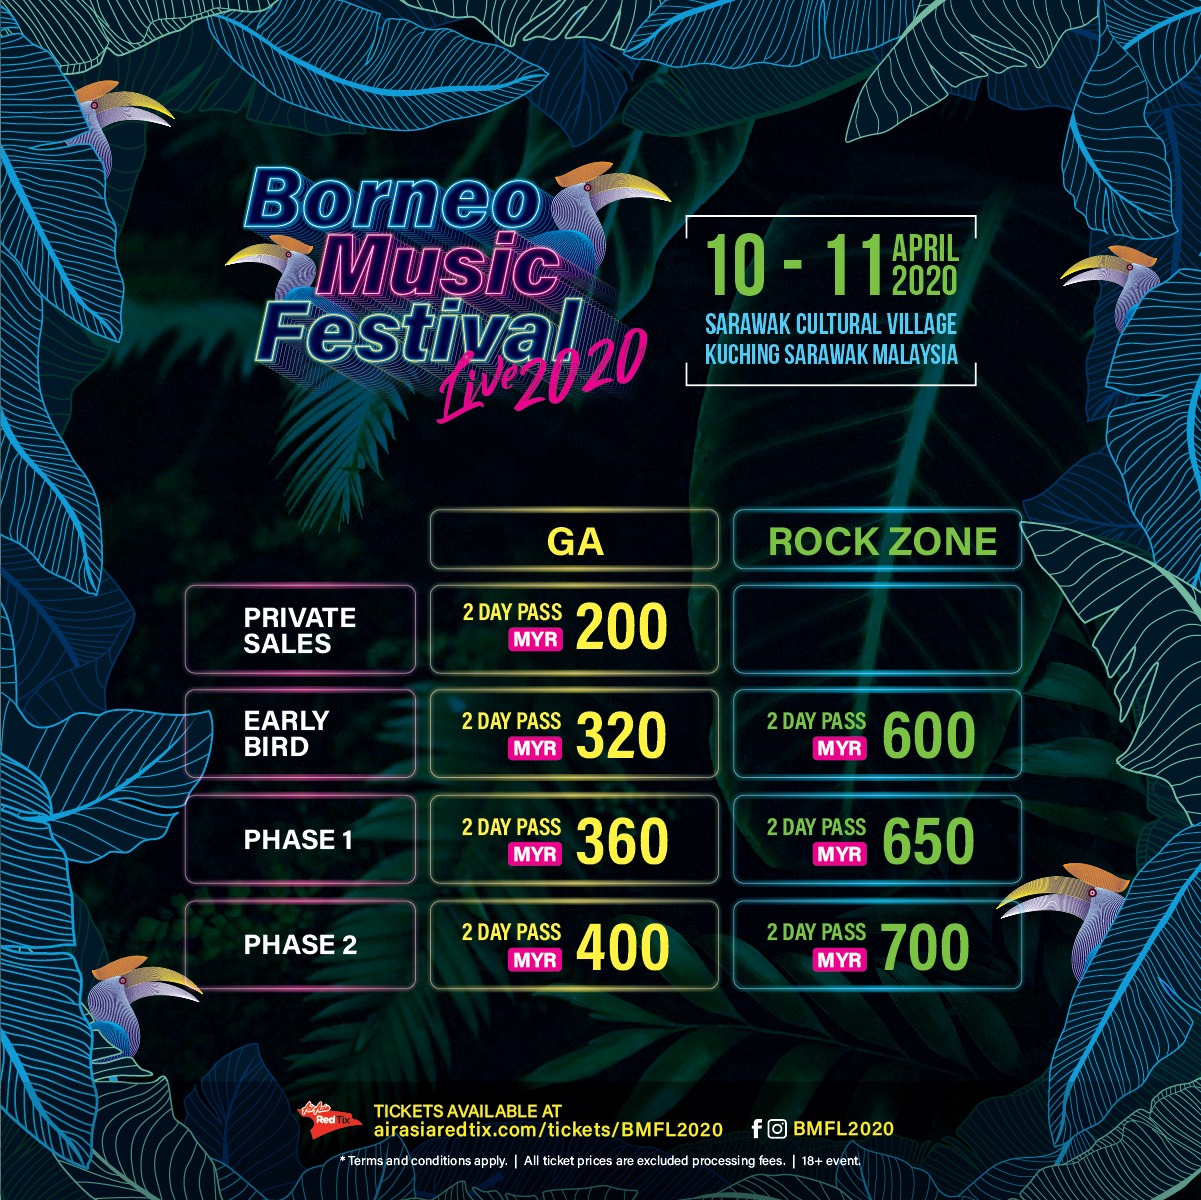  Music Festival Live 2020 ticket